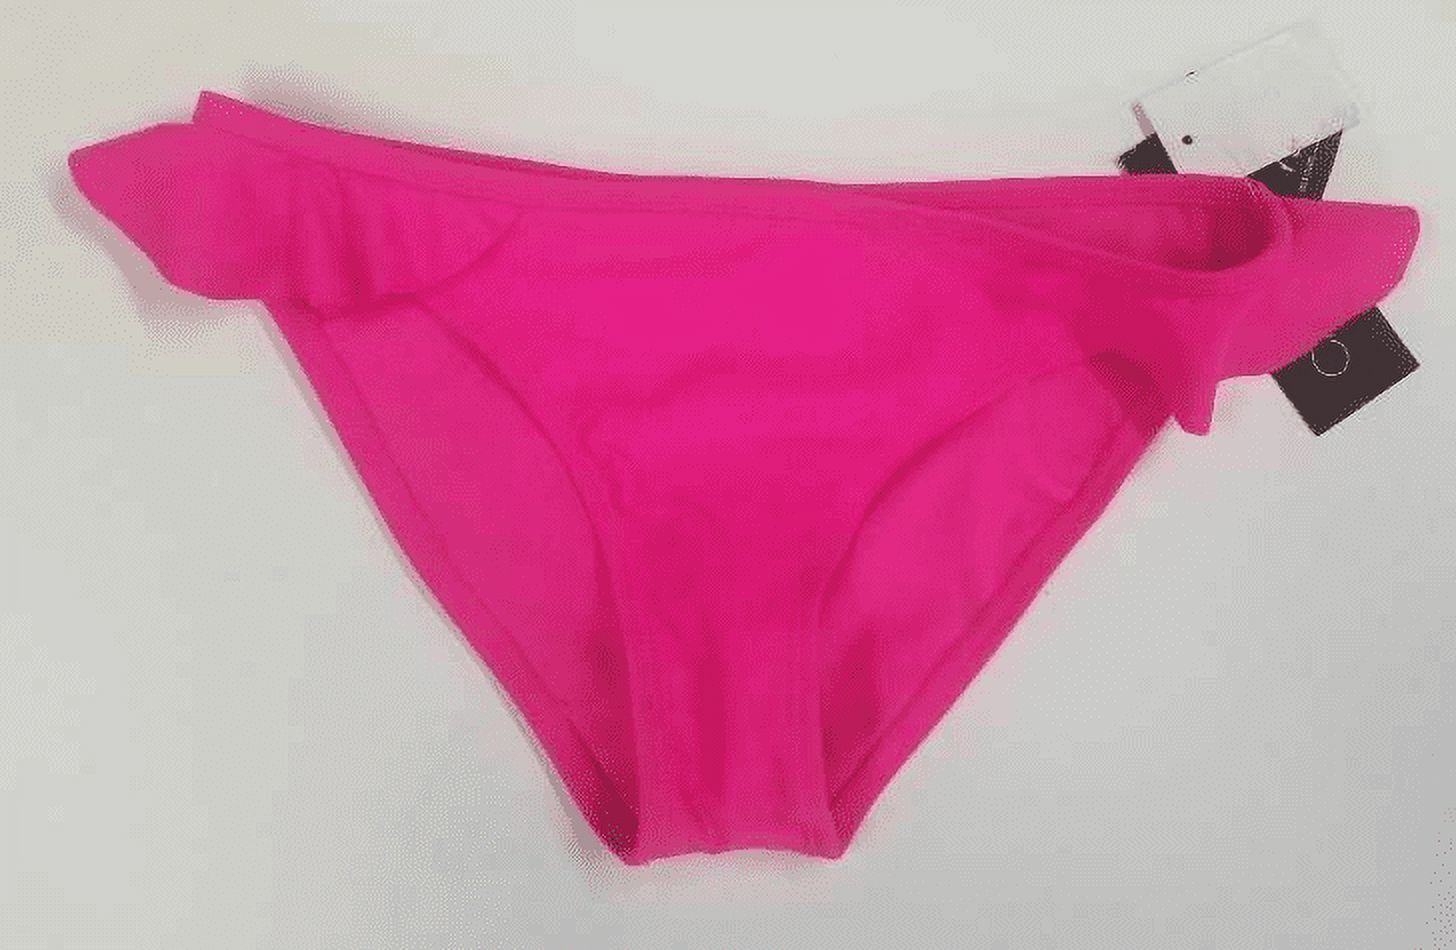 California Waves Womens Ruffled Hipster Swim Bottom Separates Pink XL - image 2 of 3